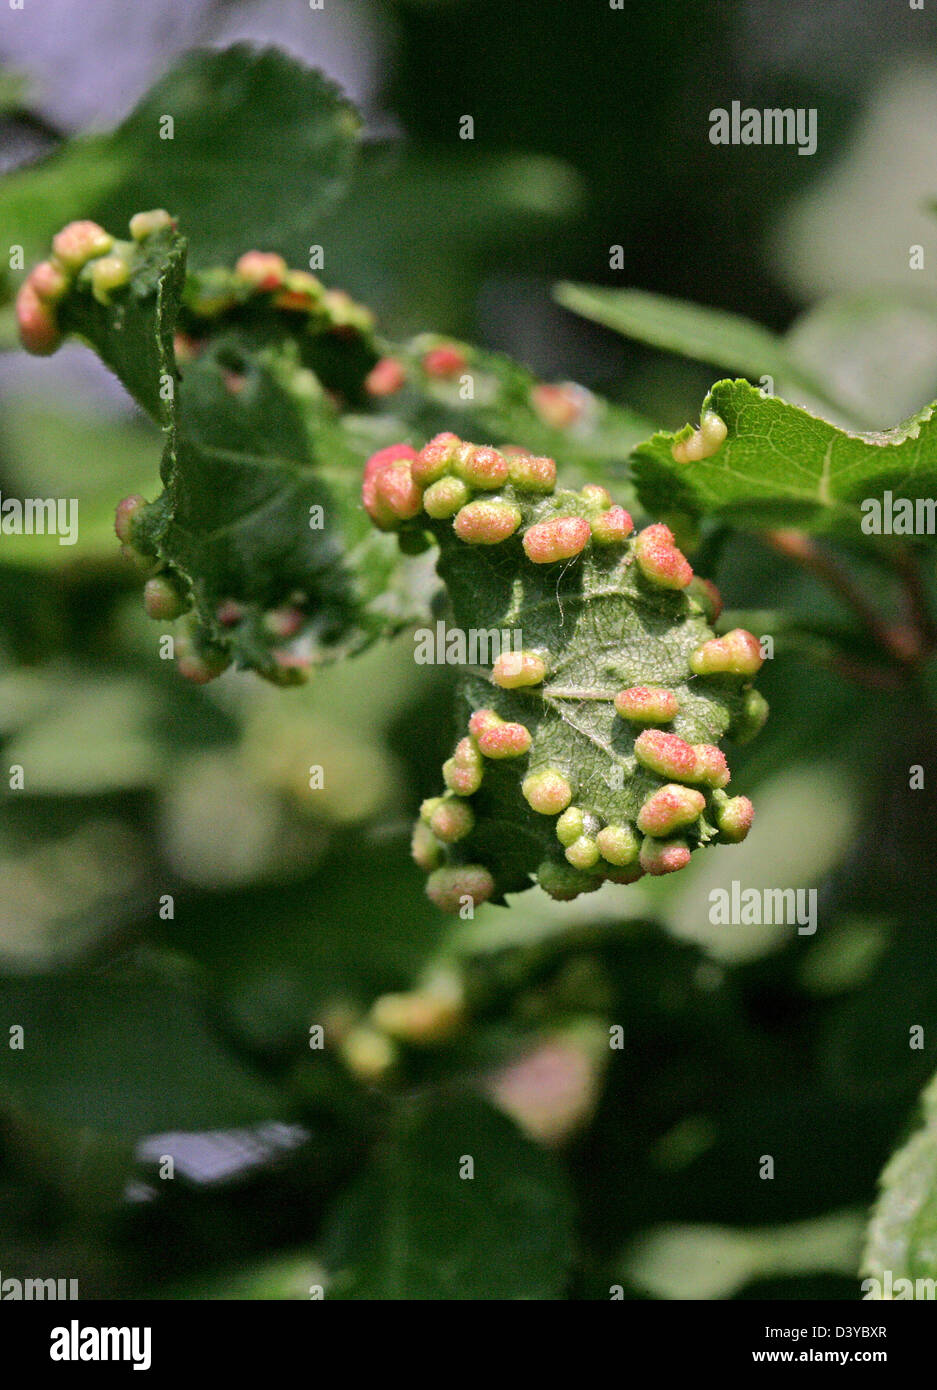 Blackthorn Gall Mite, Eriophyes similis, Eriophyidae, Actinedida, Arachnida. On Blackthorn Leaf, Prunus spinosa. Stock Photo